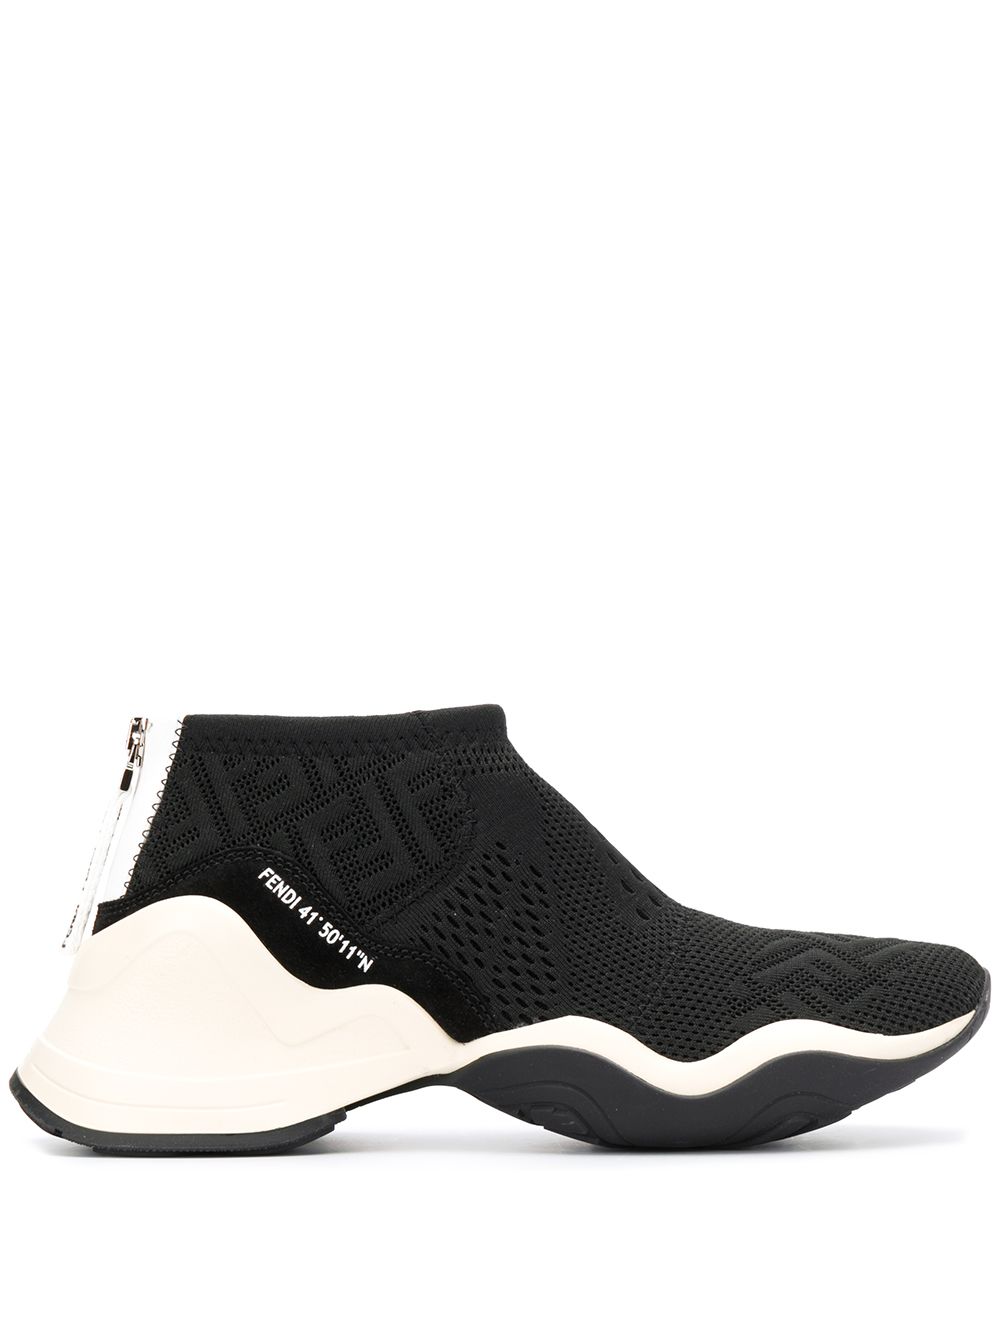 fendi black and white sneakers